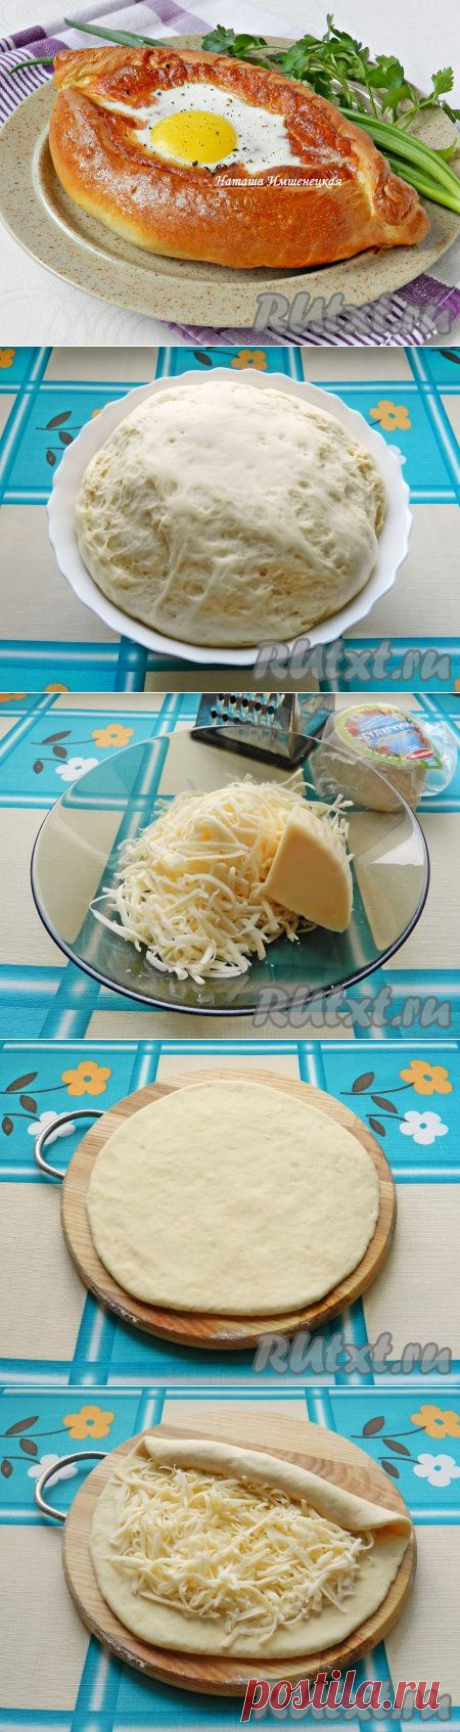 Рецепт аджарских хачапури с сыром | Домашняя выпечка